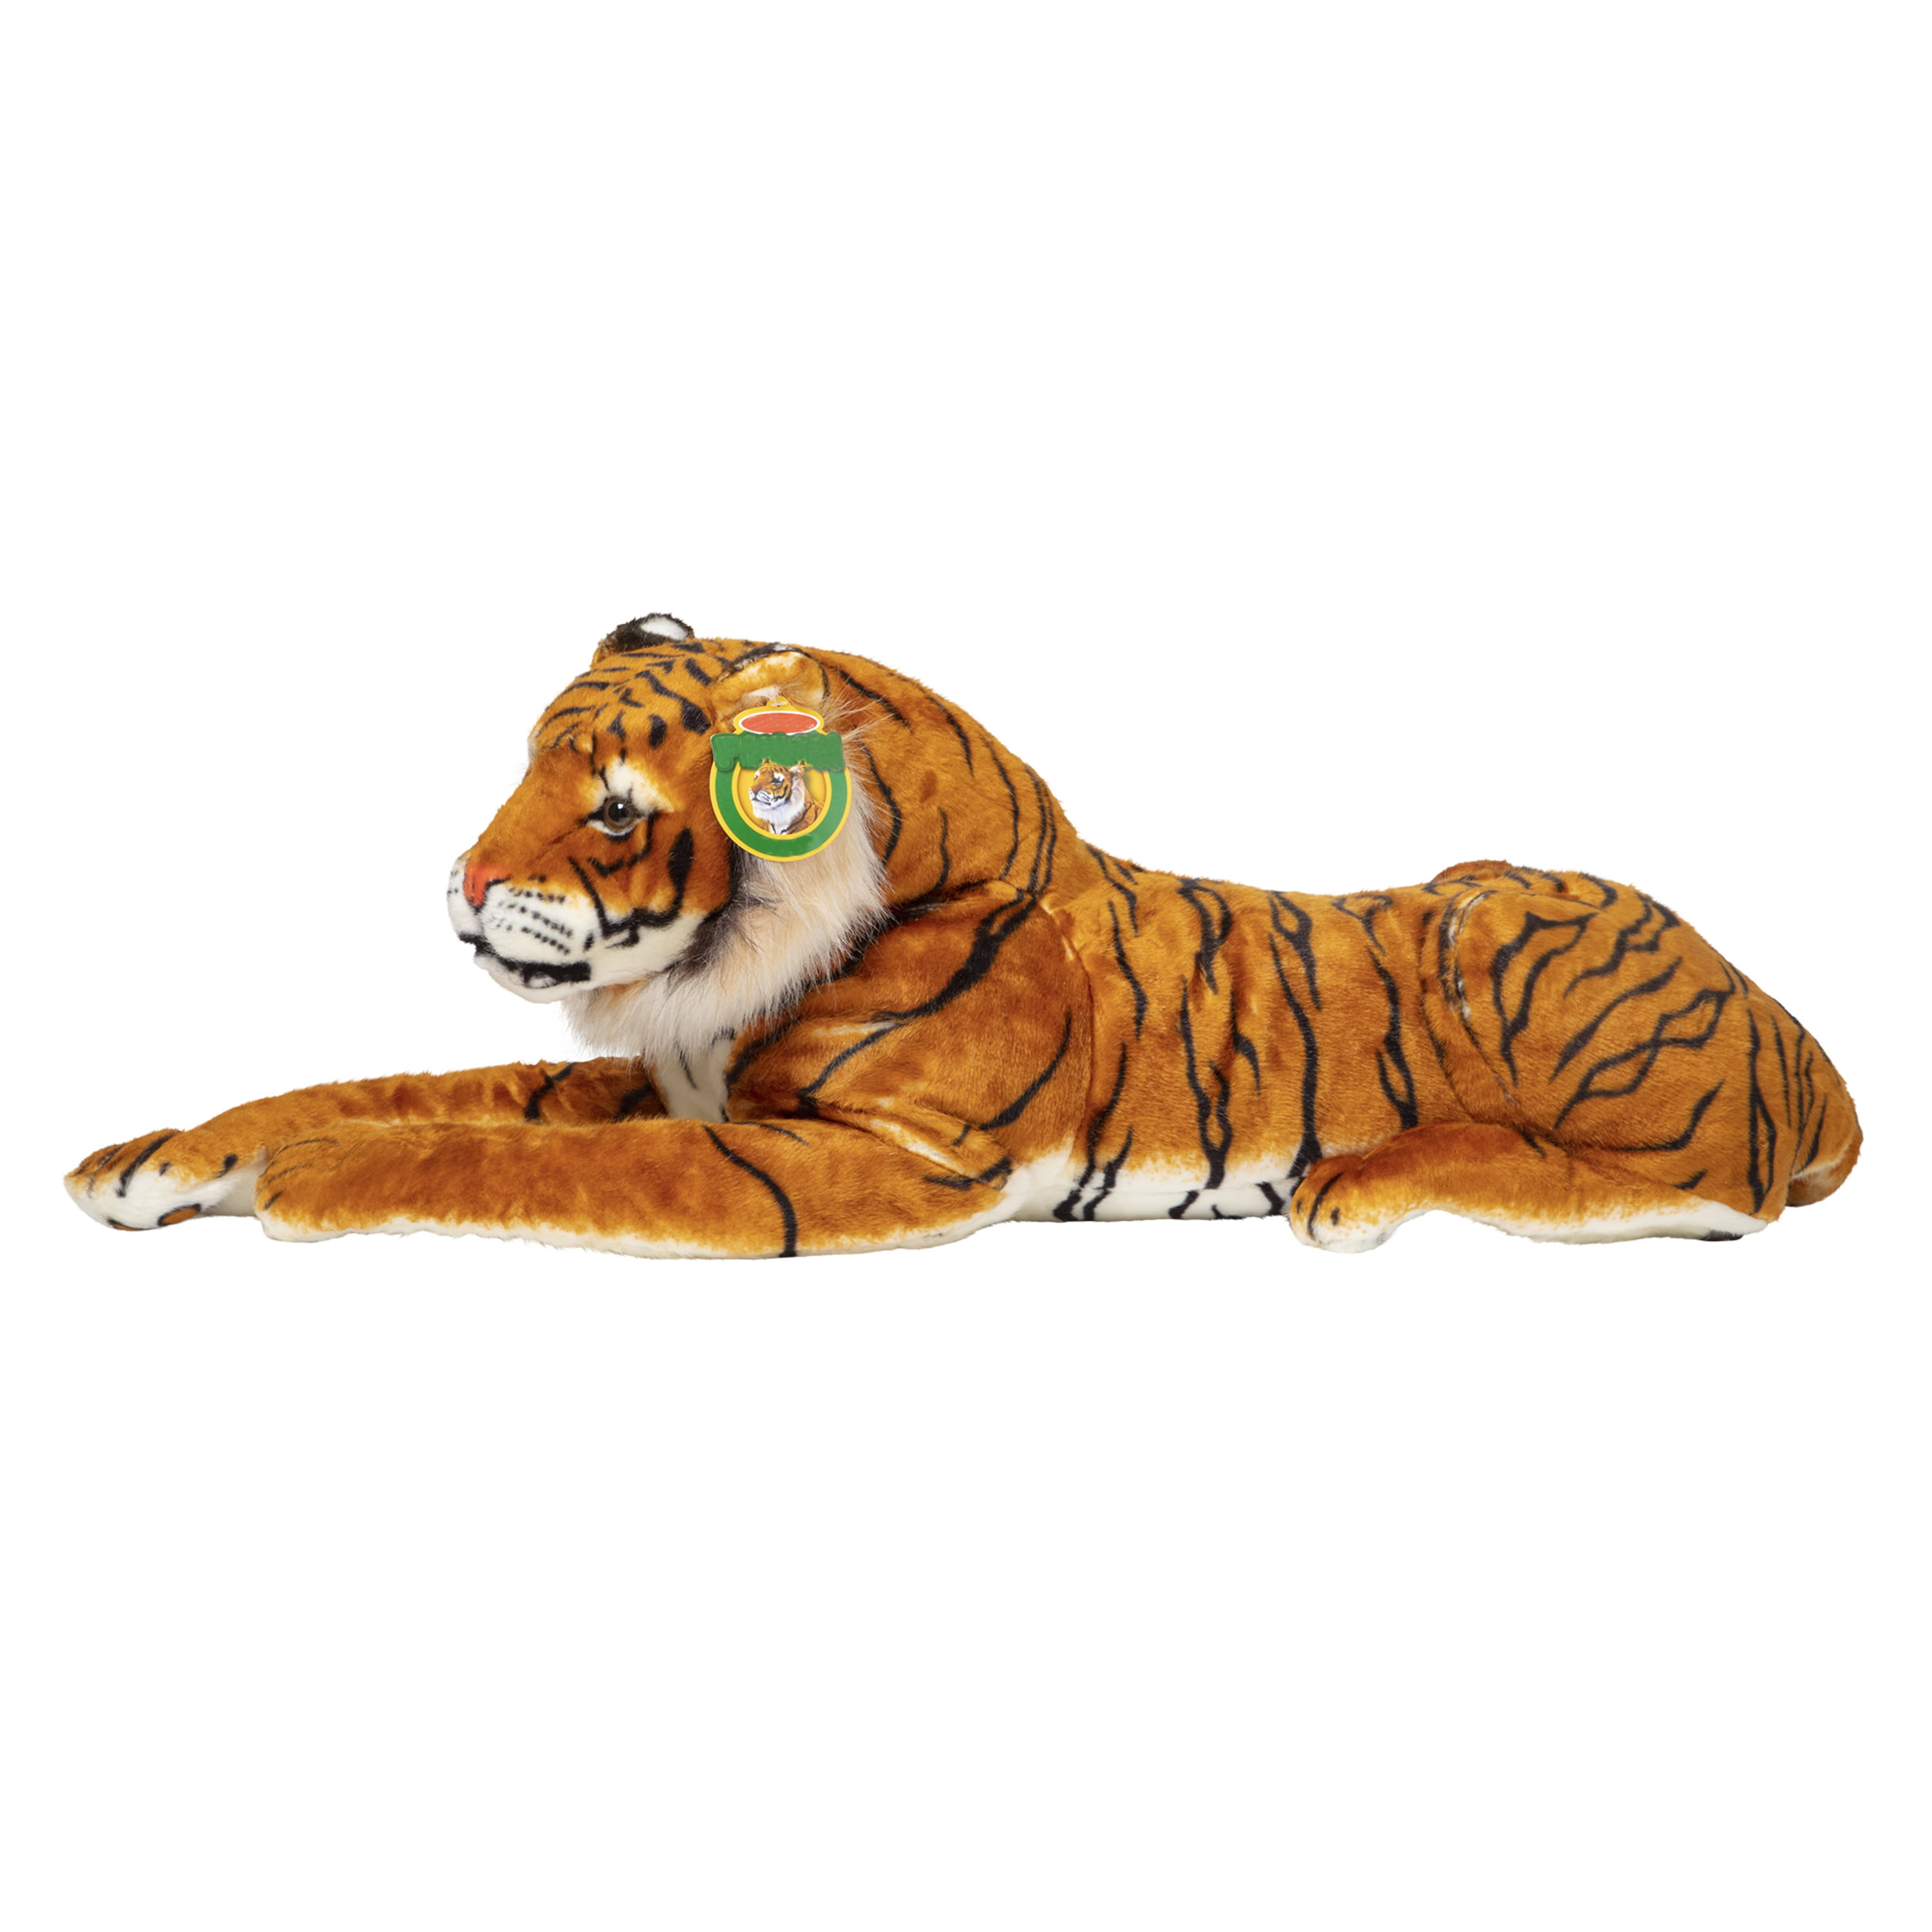 FKJLUN Giant Tiger - Lifelike Stuffed Animal (over 5 feet long) -  